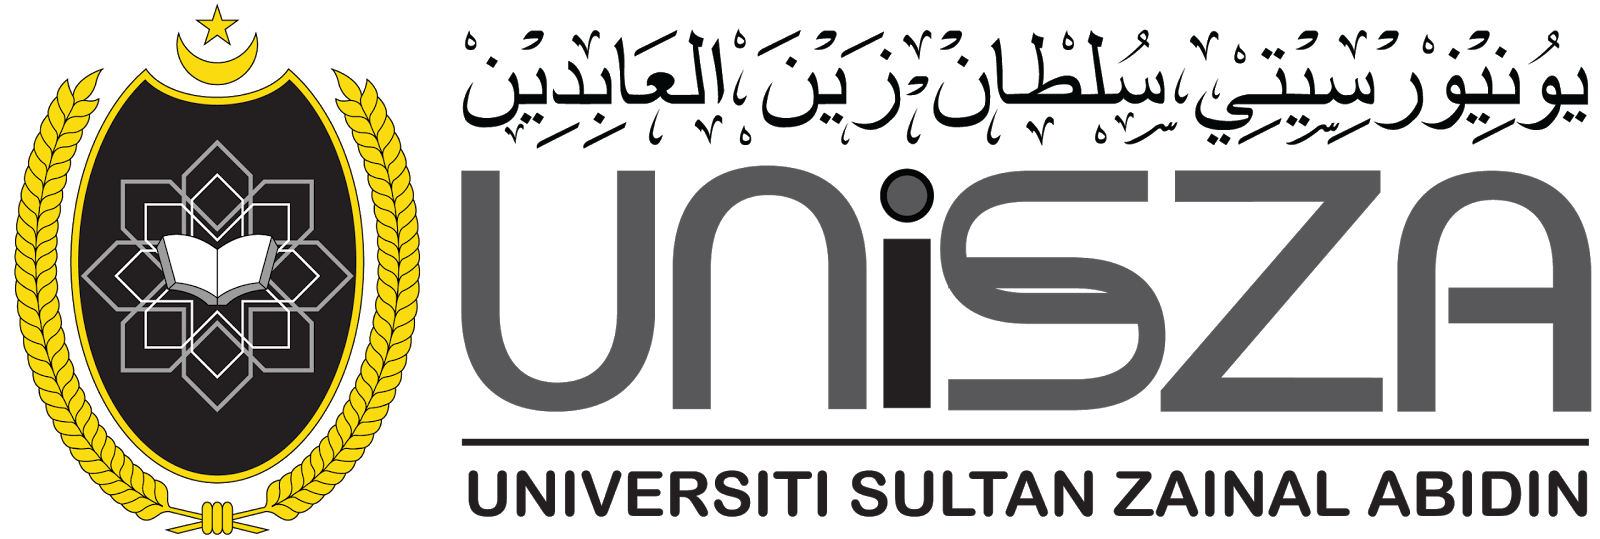 Universiti Sultan Zainal Abidin (UniSZA) logo